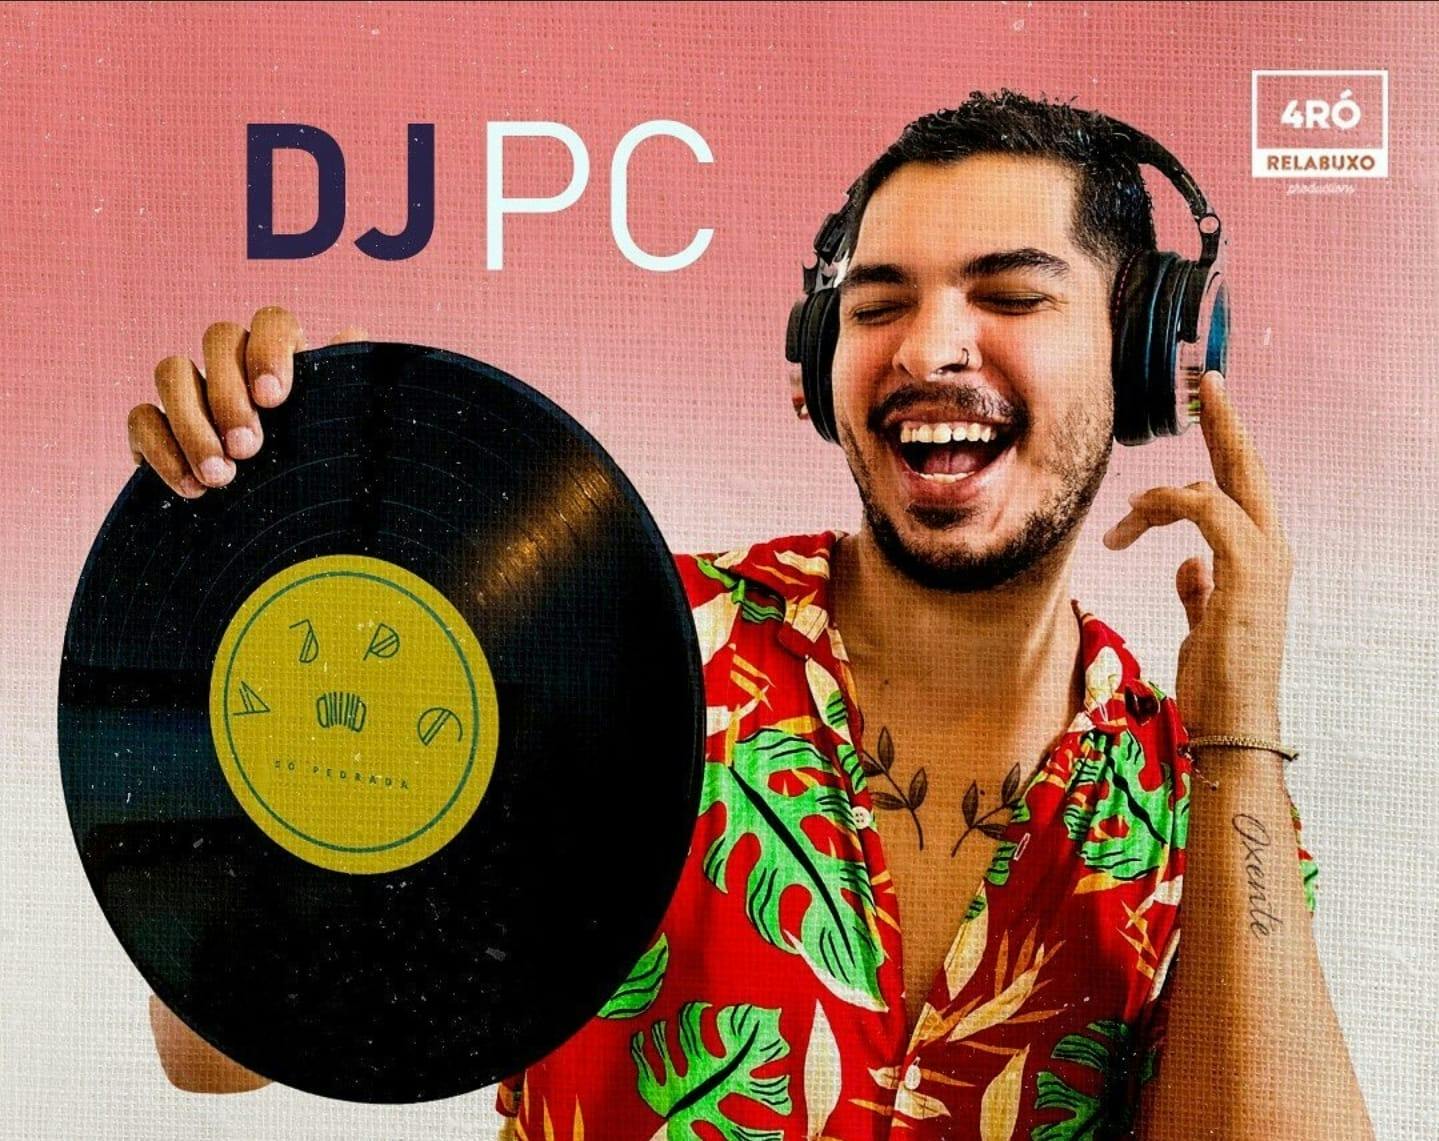 DJ PC